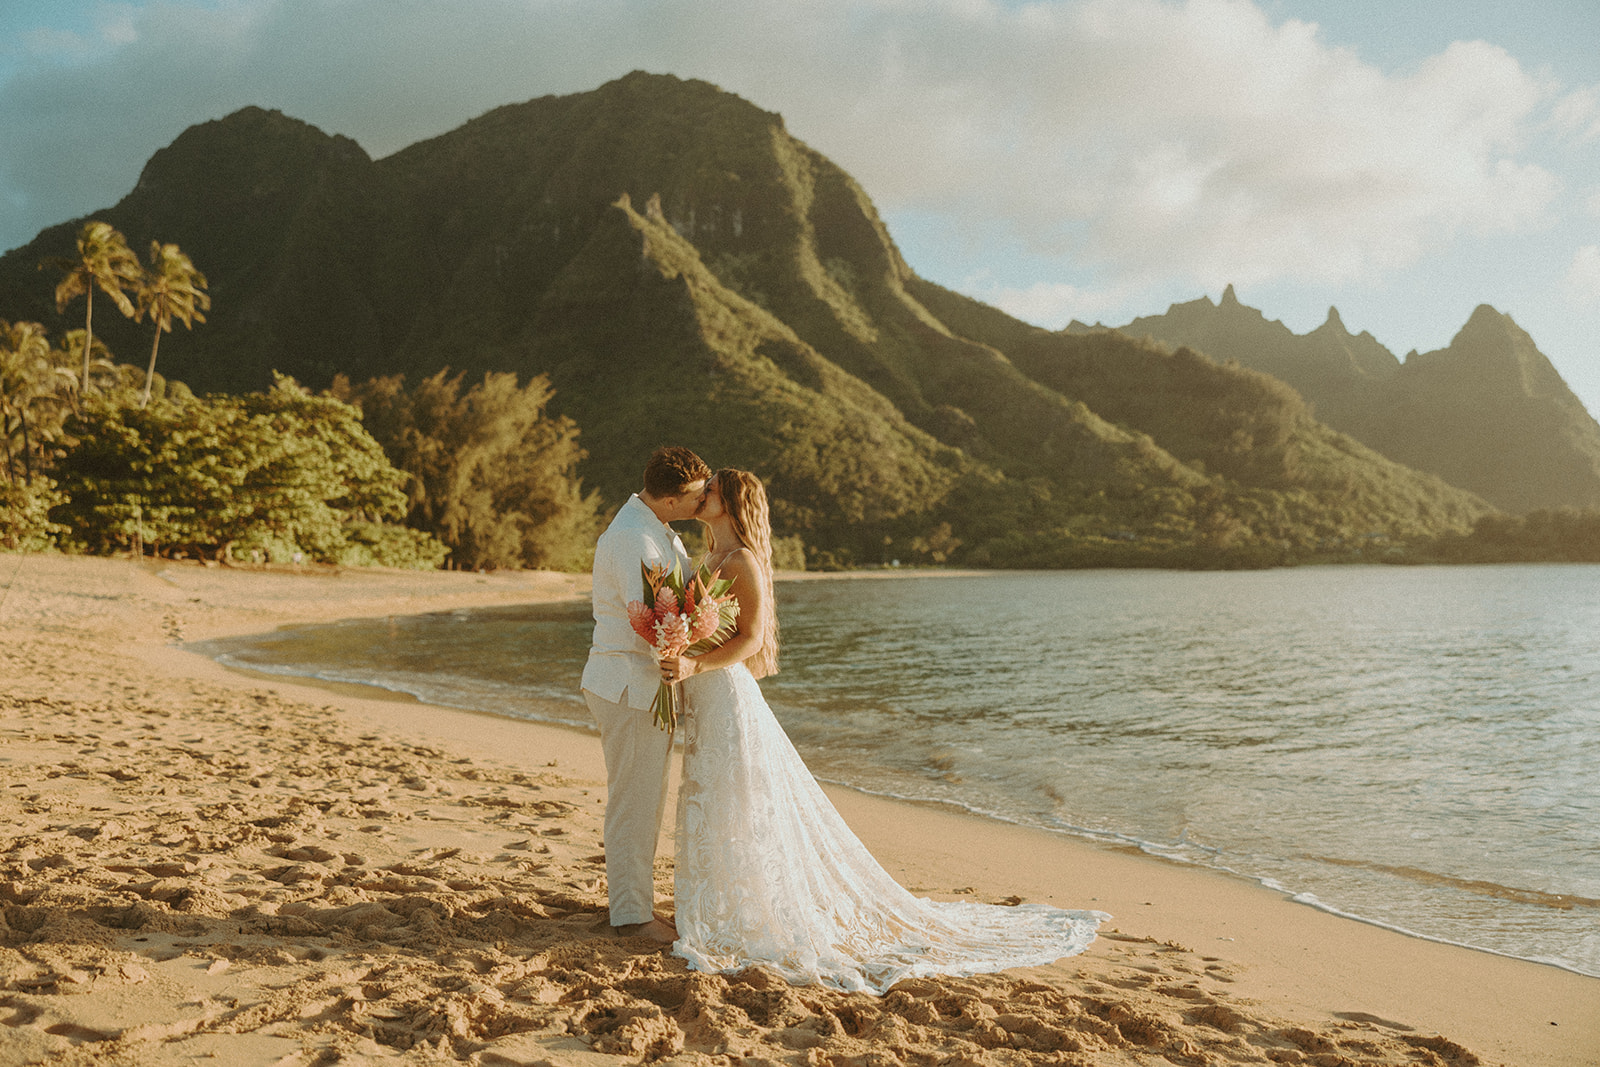 An intimate wedding photoshoot in kauai